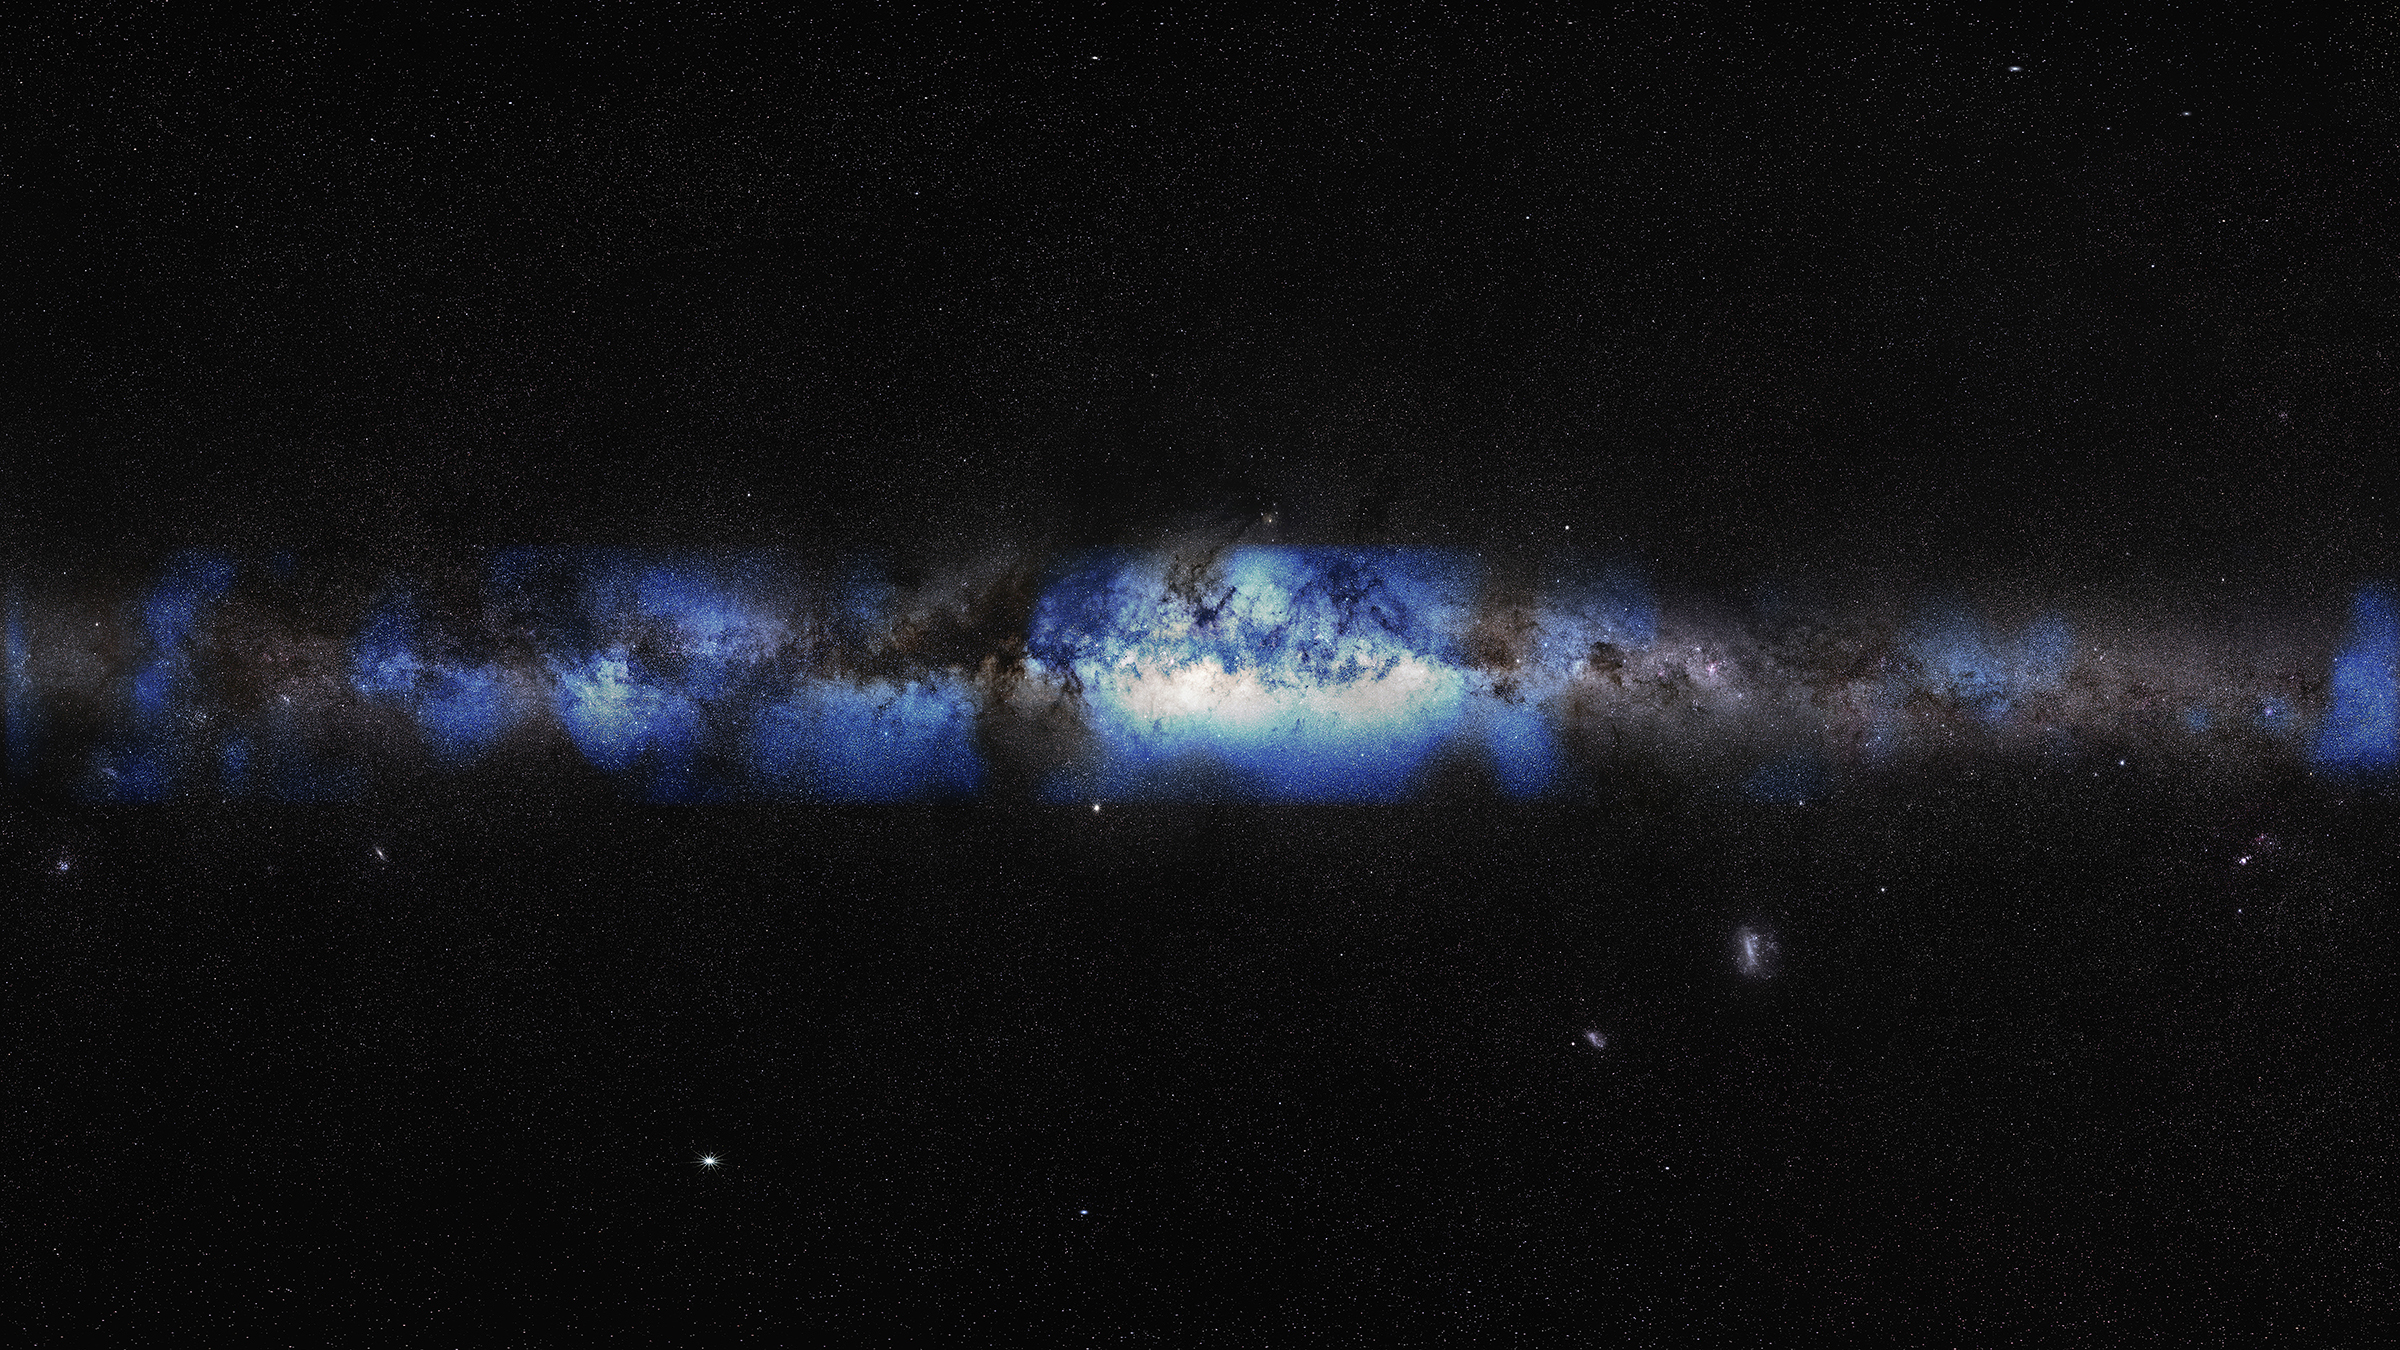 UW-Madison IceCube researchers produce first neutrino image of Milky Way